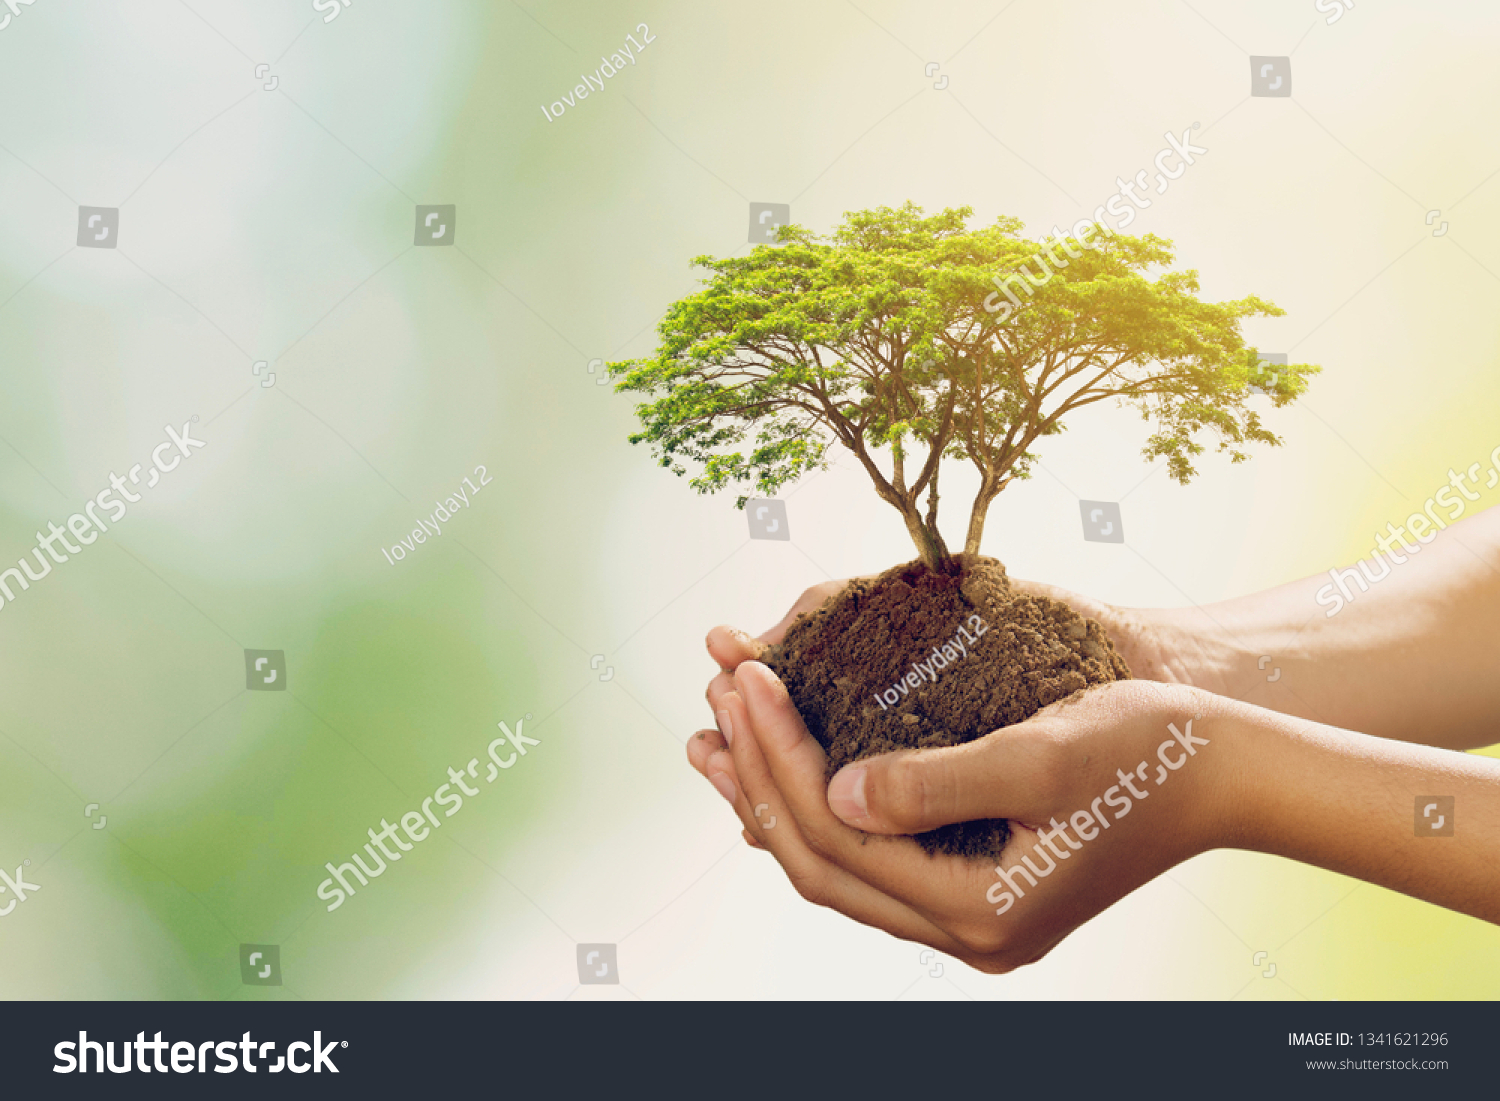 hand holdig big tree growing on green background #1341621296